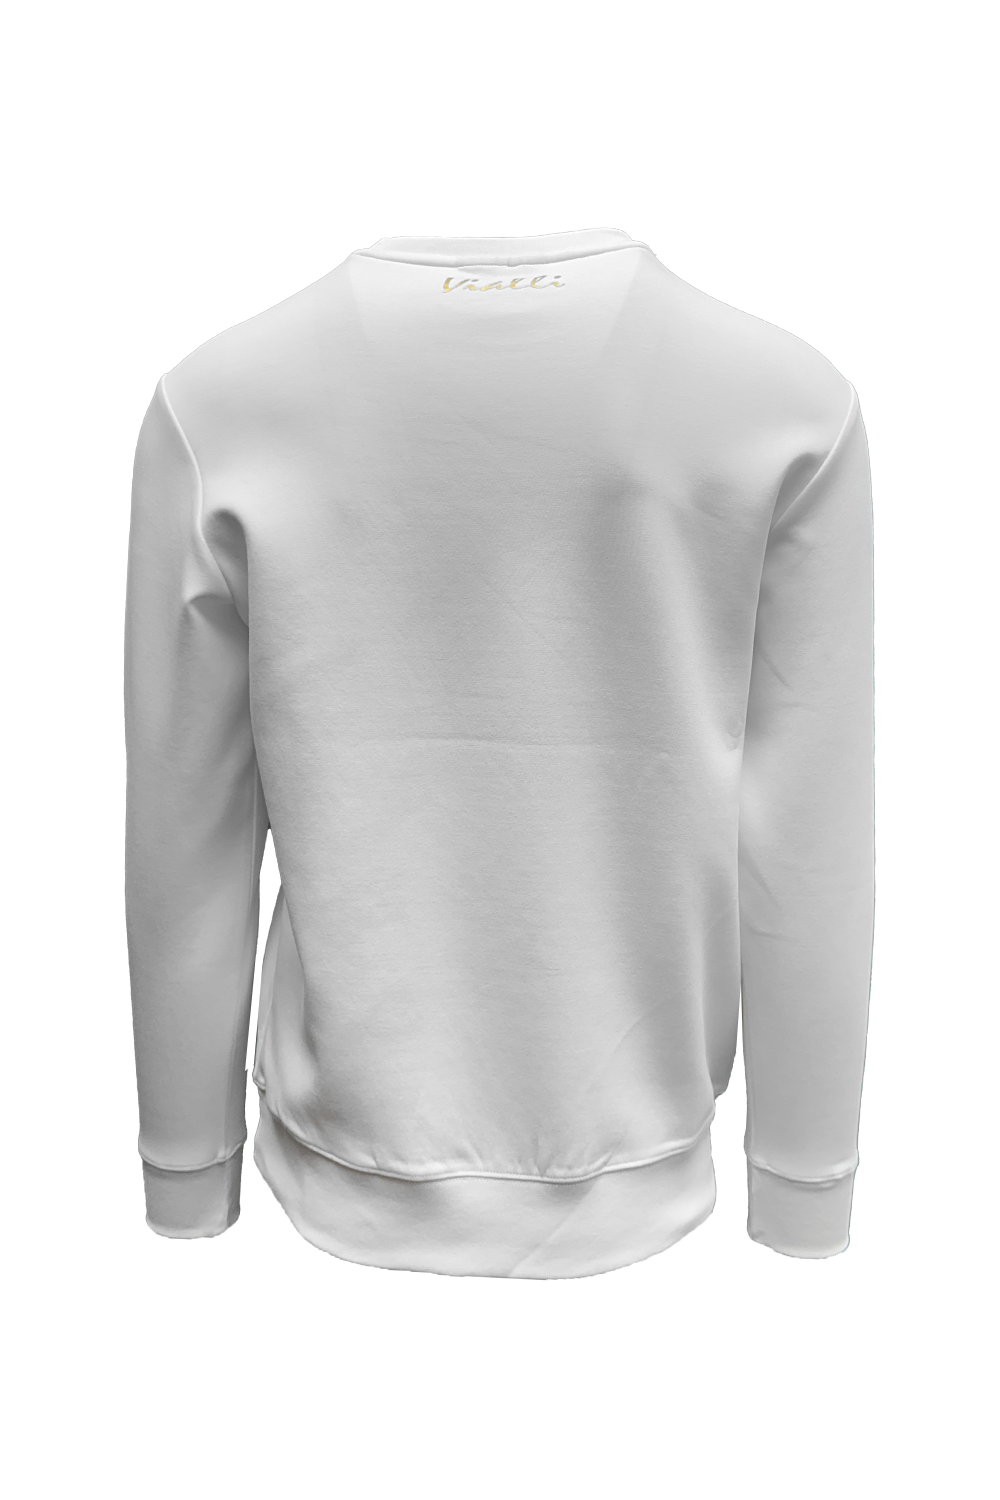 Vialli Vj24Wt52 Gelat02 Sweatshirt  White